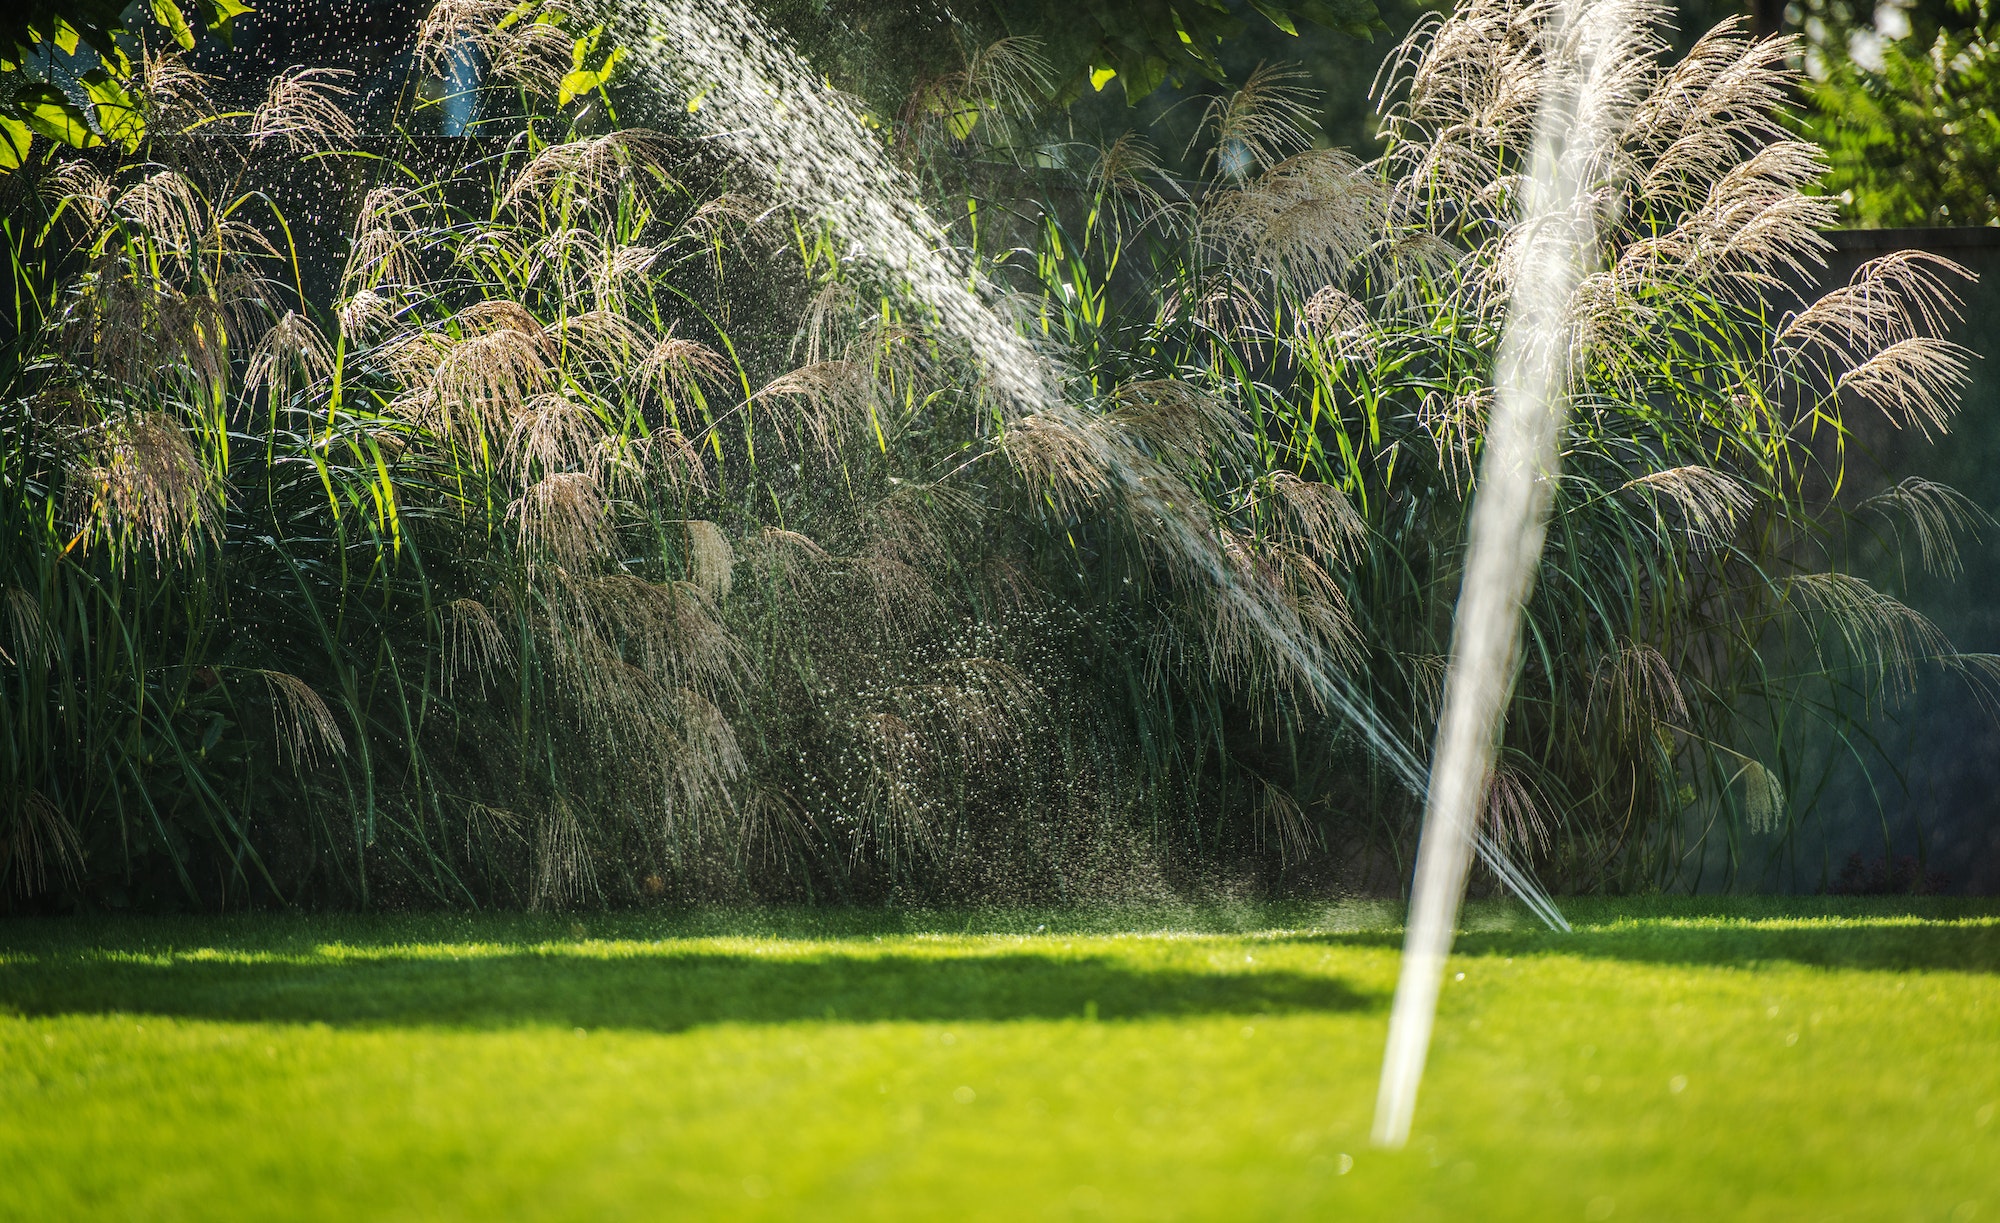 Residential Backyard Garden Sprinklers Irrigation System